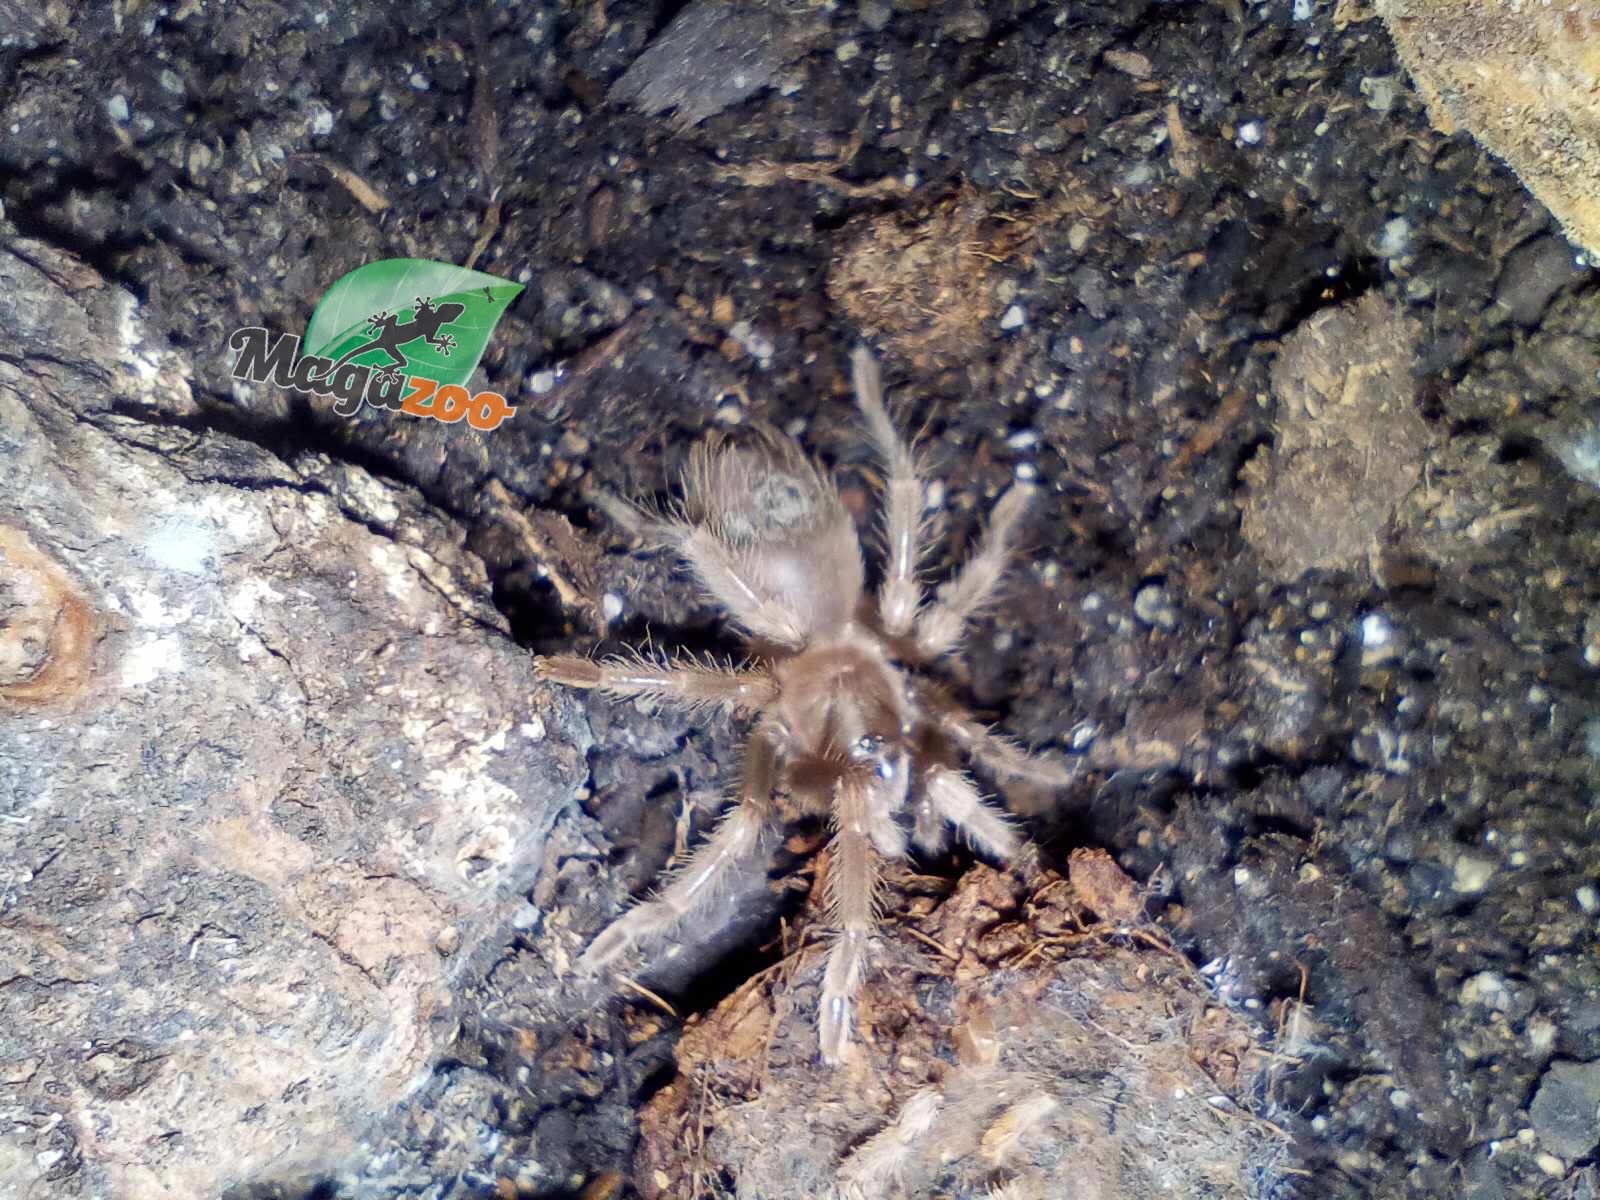 Magazoo Mexican red-kneed tarantula Baby (1'') Sold with enclosure/ Brachypelma hamorii